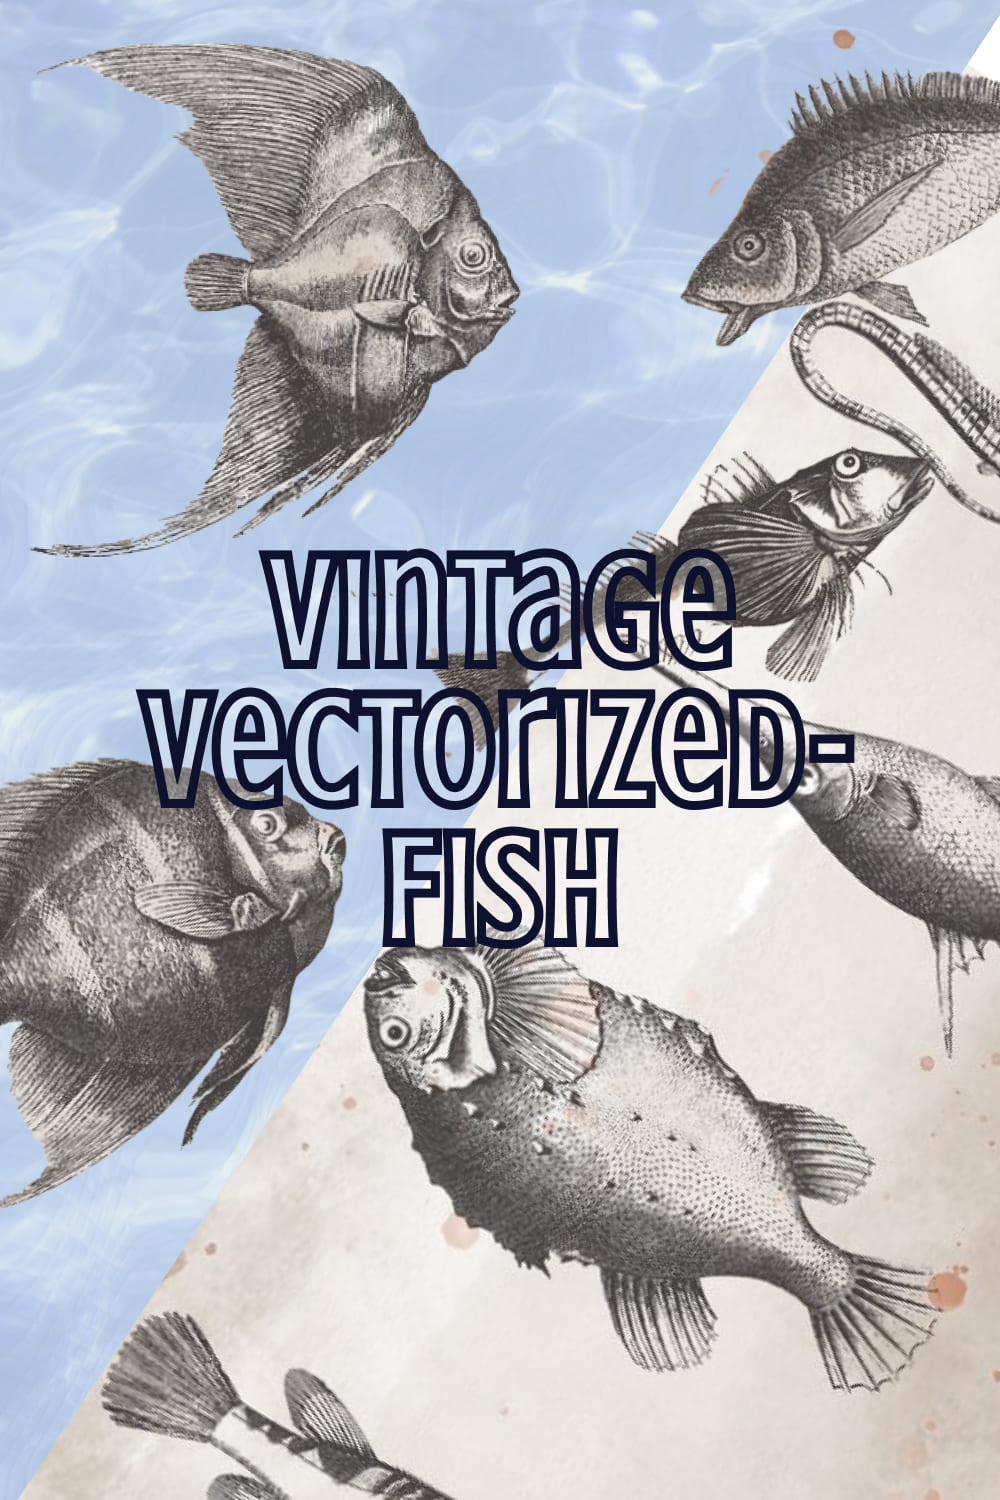 VintageVectorized-Fish Clipart - preview image.